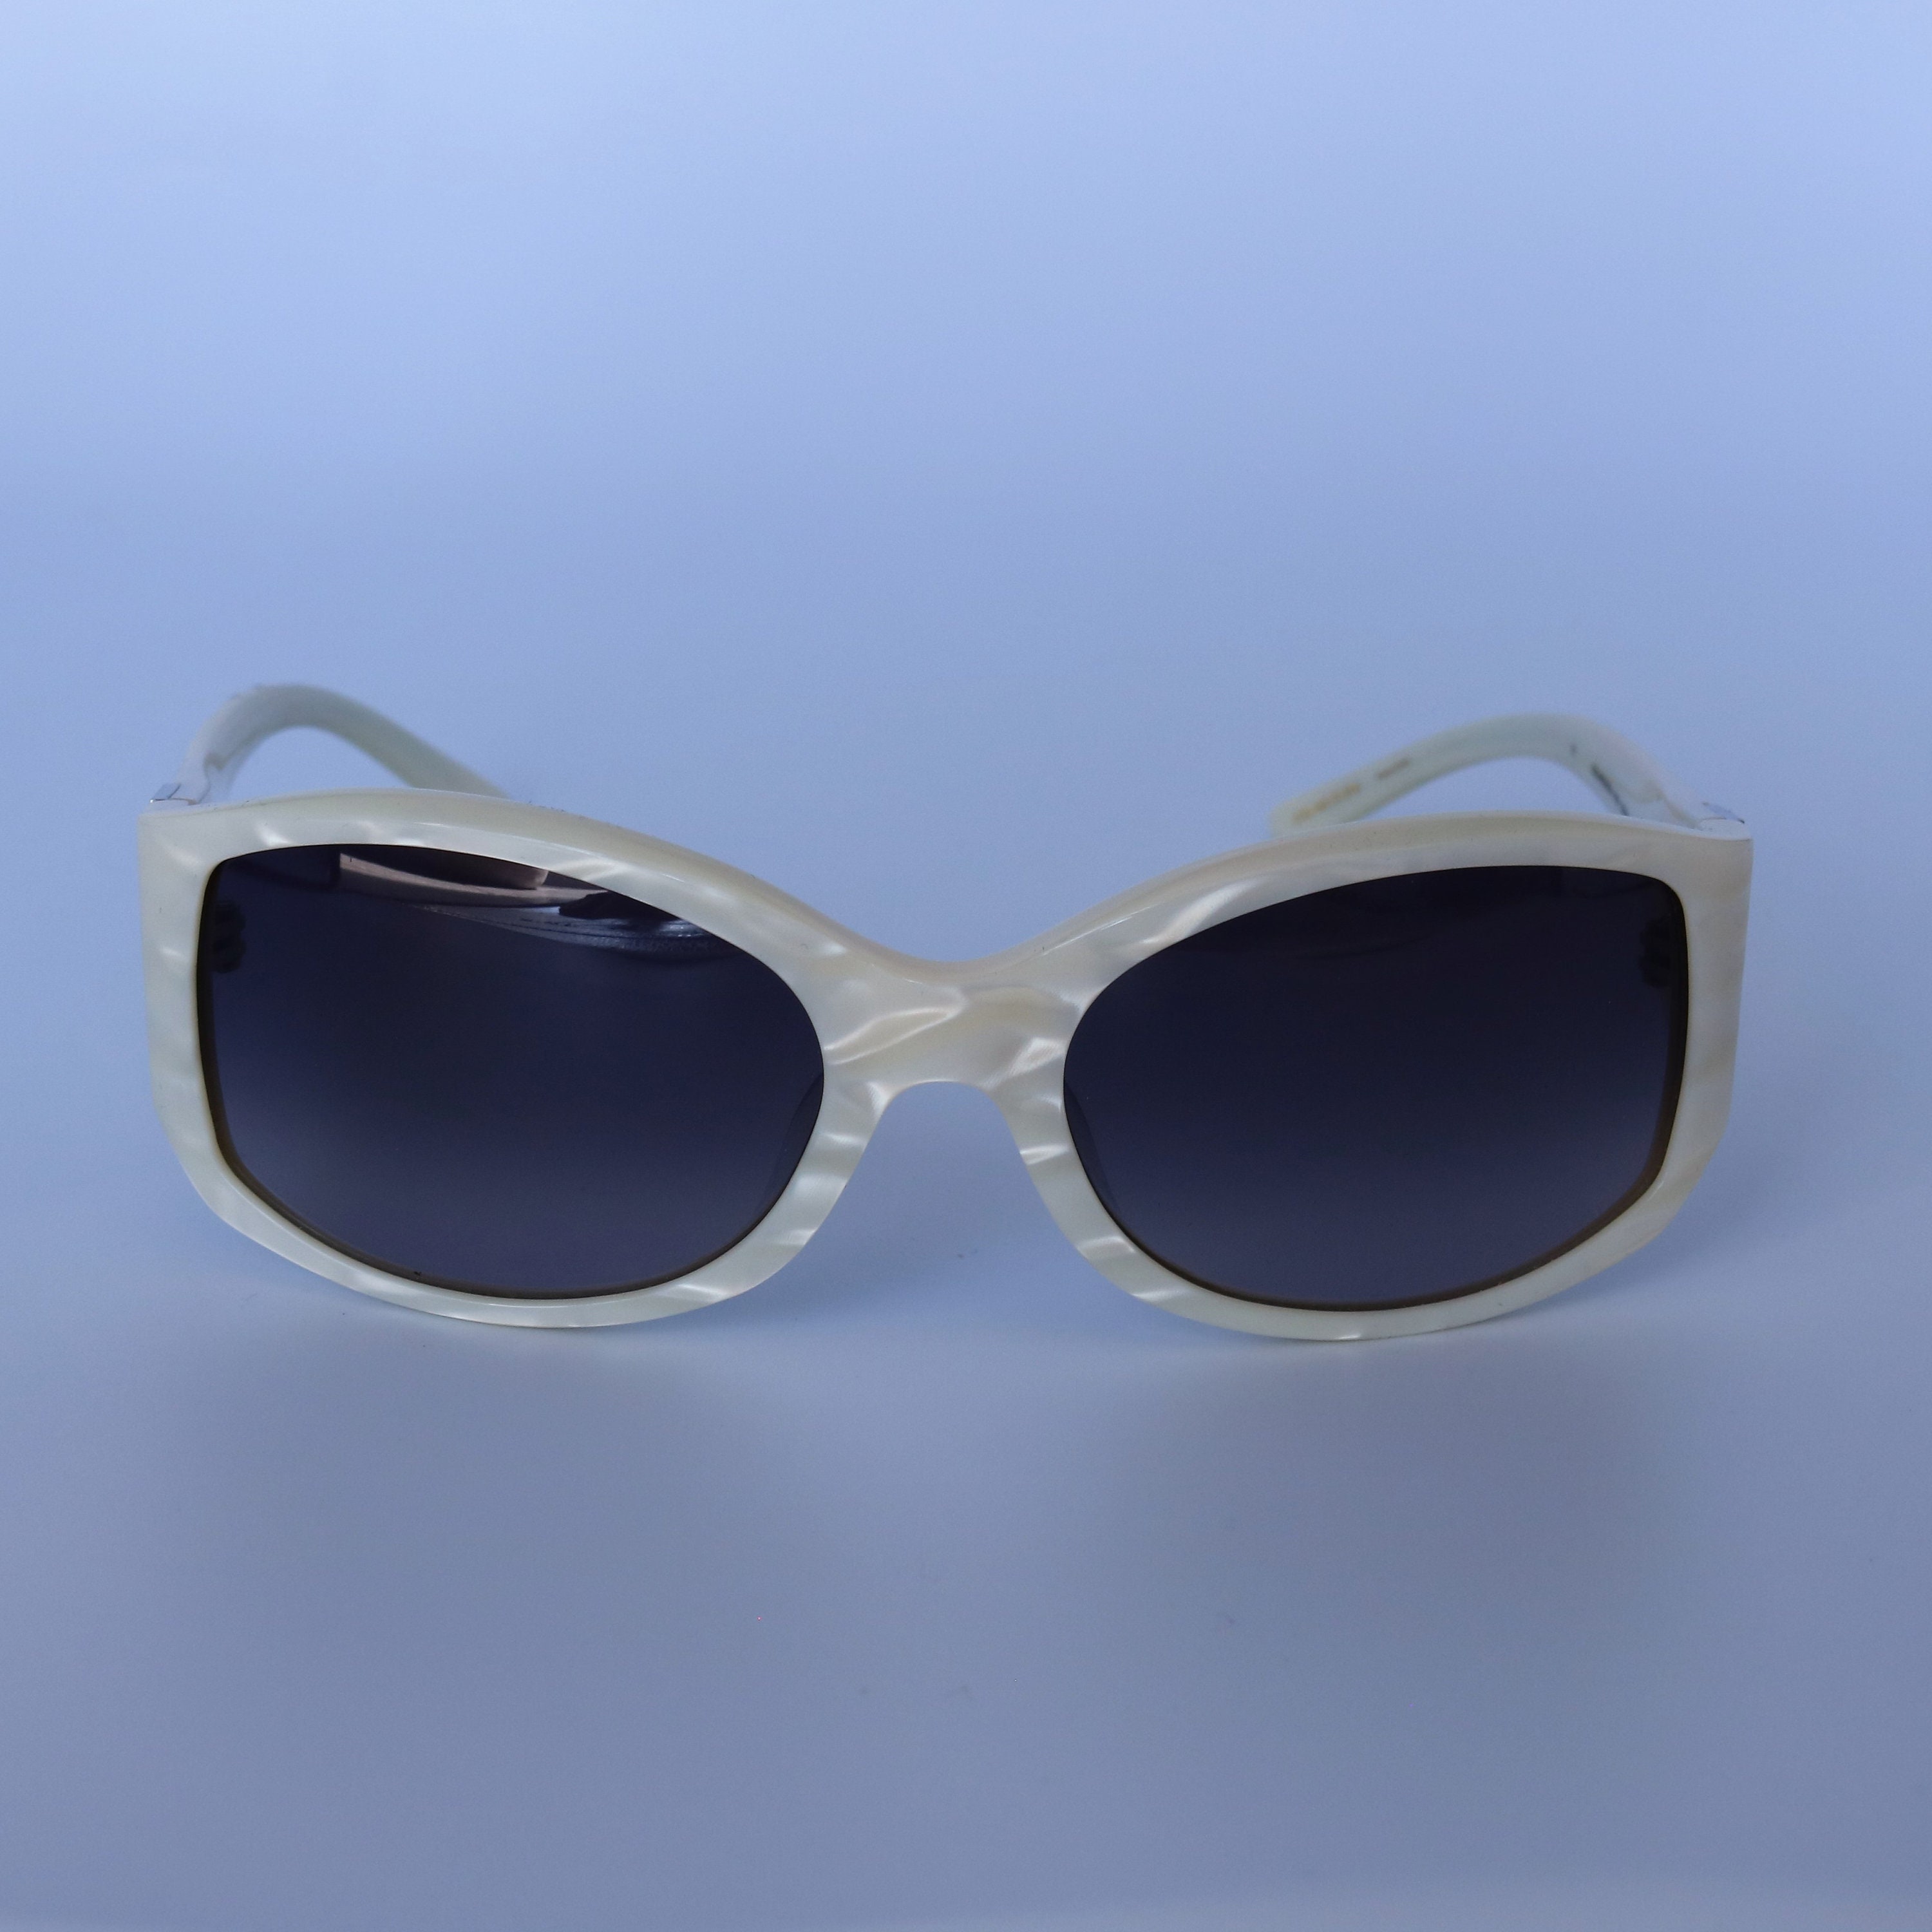 Chanel Camellia White Sunglasses: Elegant Floral Shades - Sunglasses -  Costume & Dressing Accessories